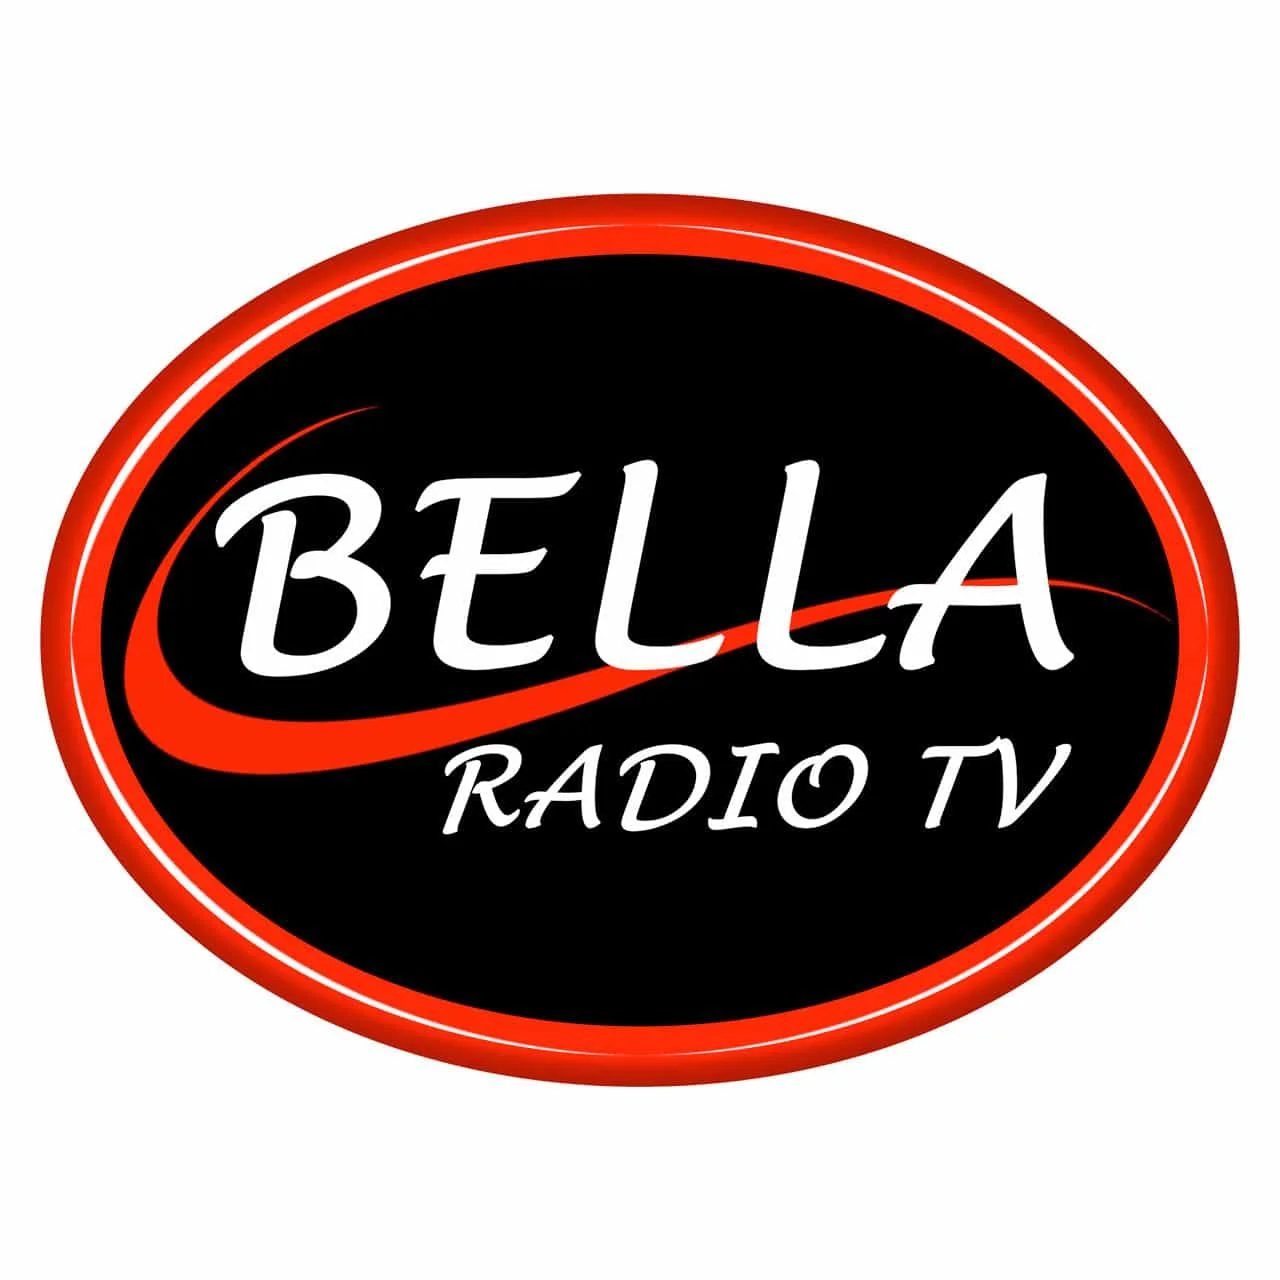 Bella Radio TV